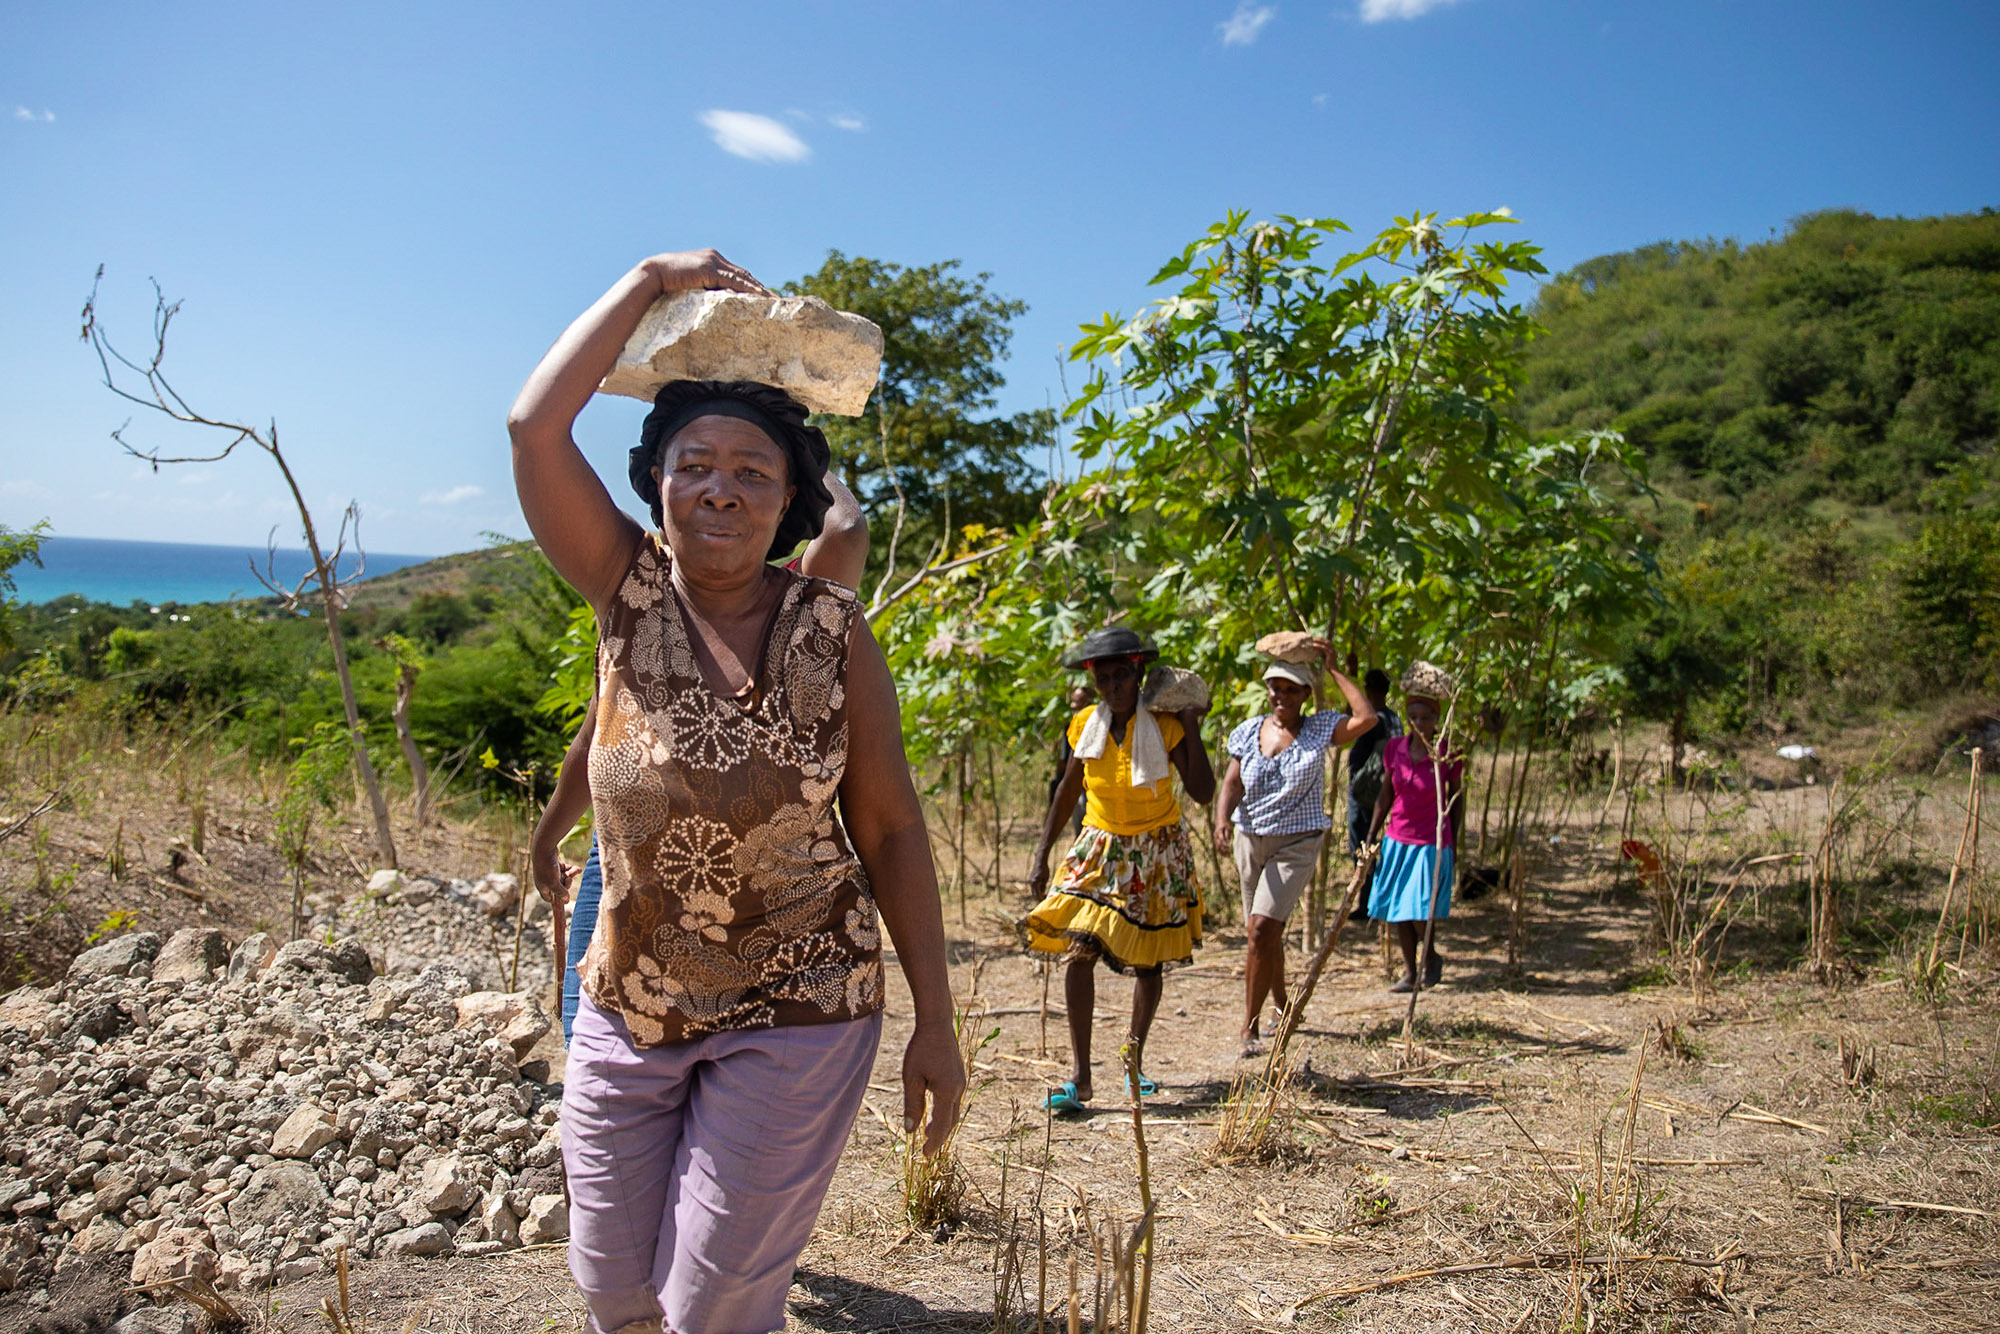 Haiti at ‘crossroads’ entering post-earthquake reconstruction